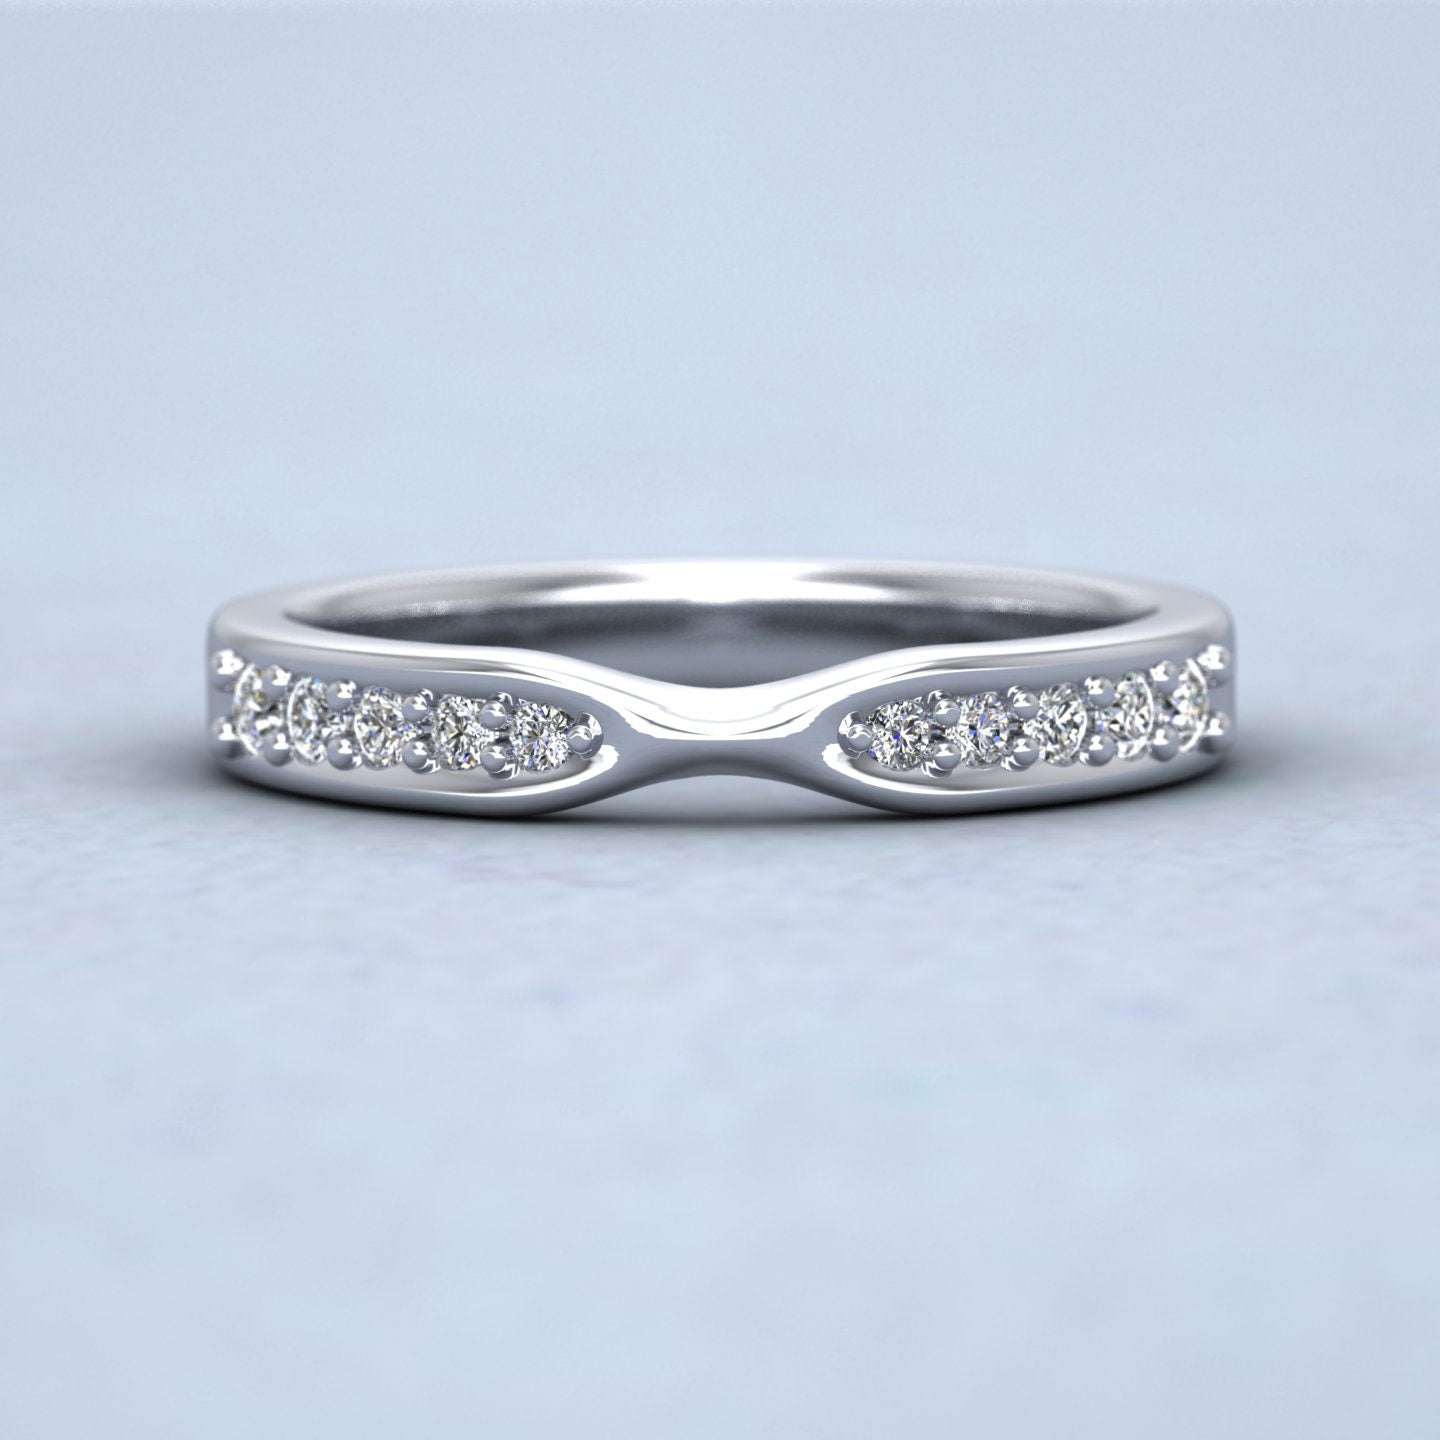 Pinch Design Wedding Ring With Diamonds 9ct White Gold 3mm Wedding Ring